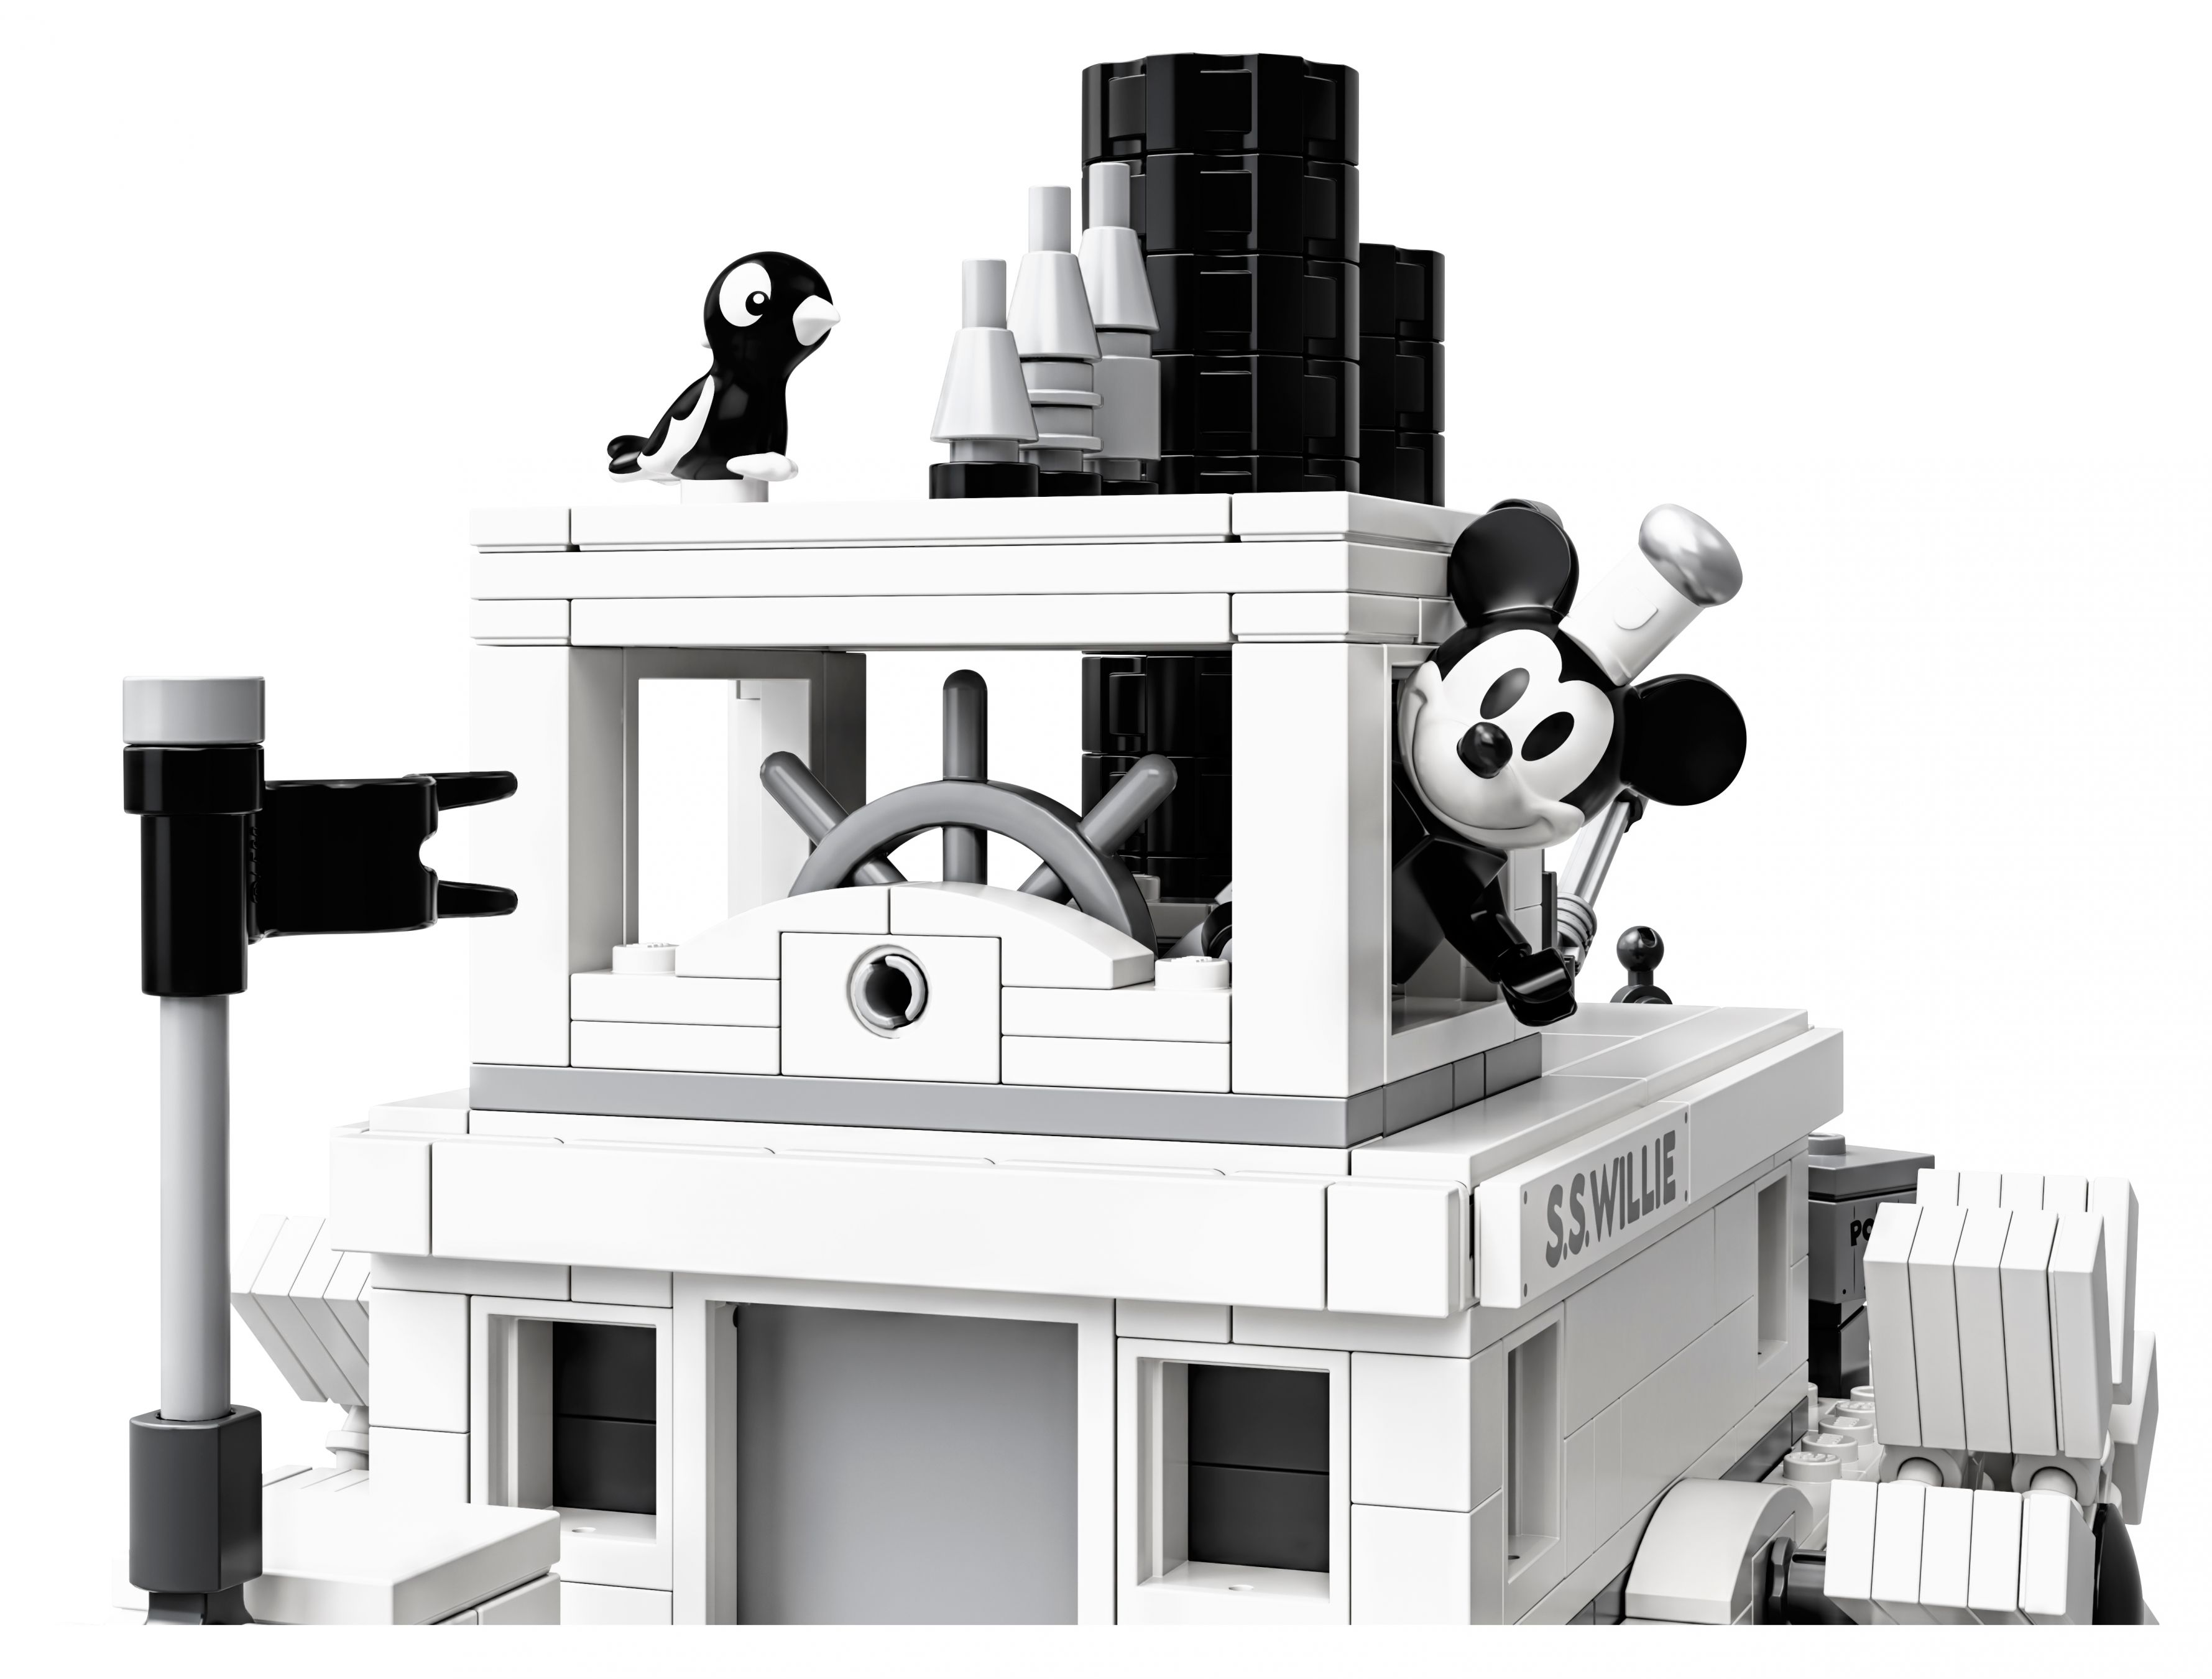 LEGO Ideas 21317 Steamboat Willie LEGO_21317_alt5.jpg